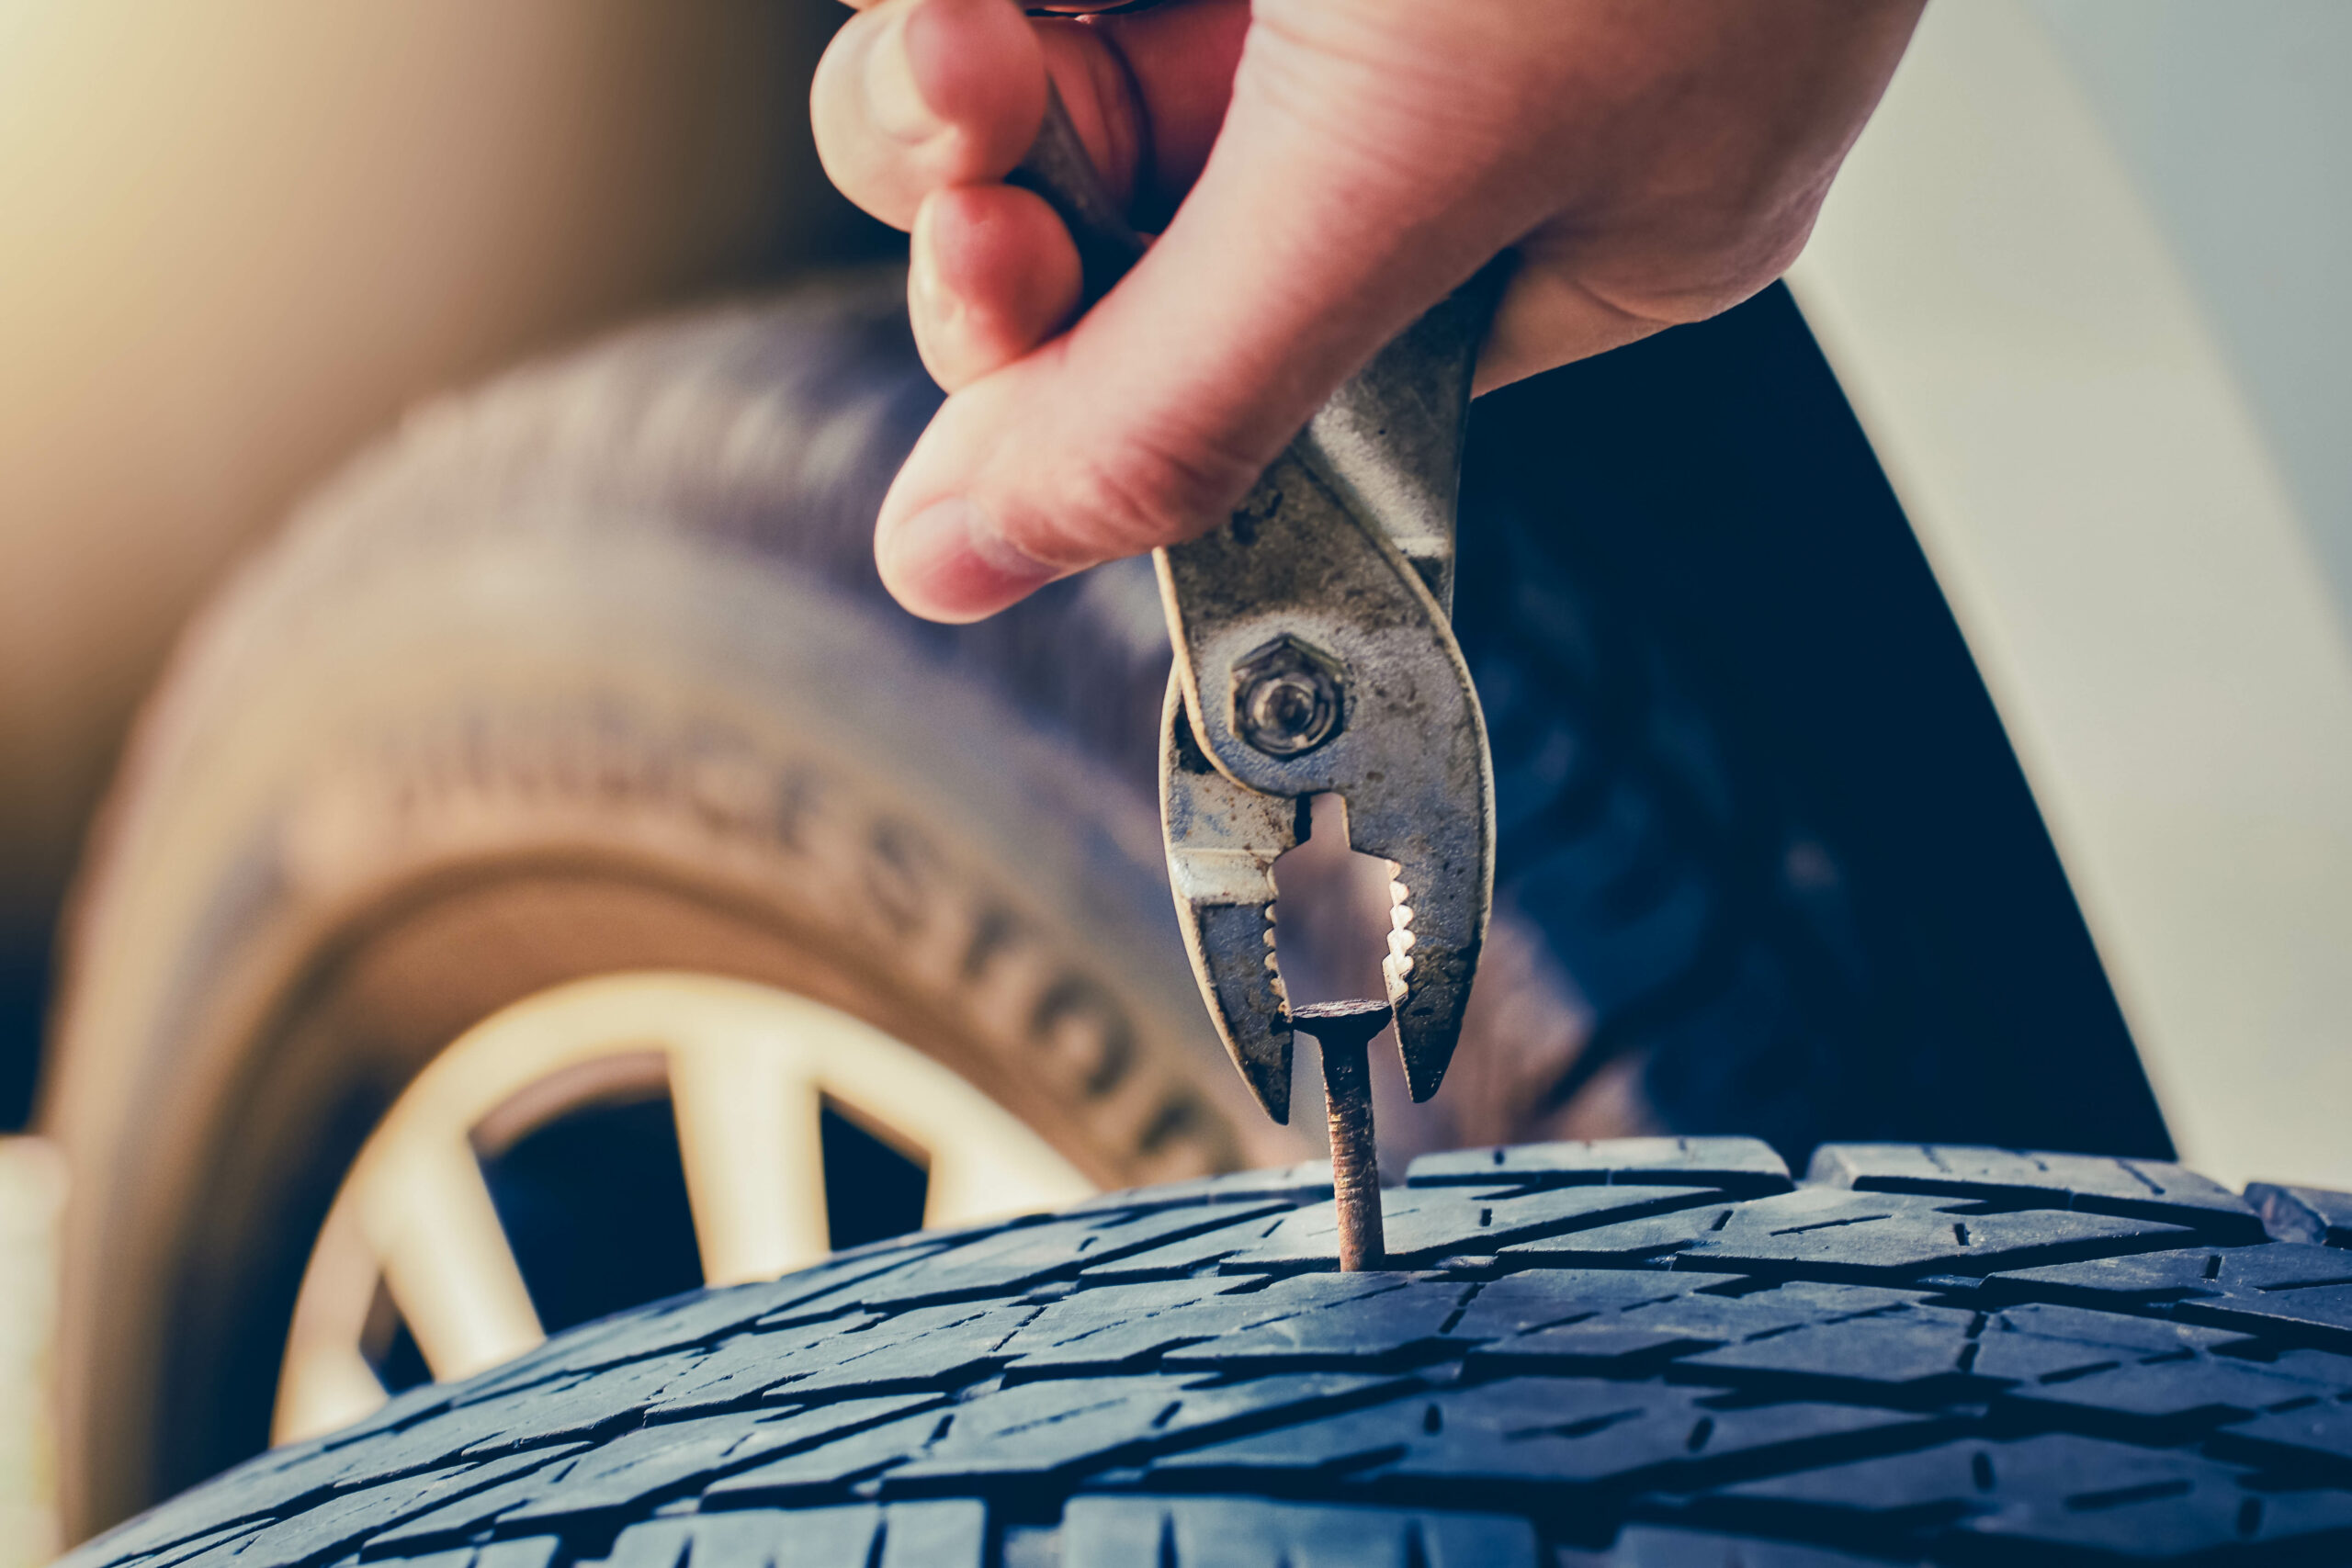 500x Car Vacuum Tyre Repair Nail Tubeless Tire Repair Rubber Nails Repair  Tools | eBay